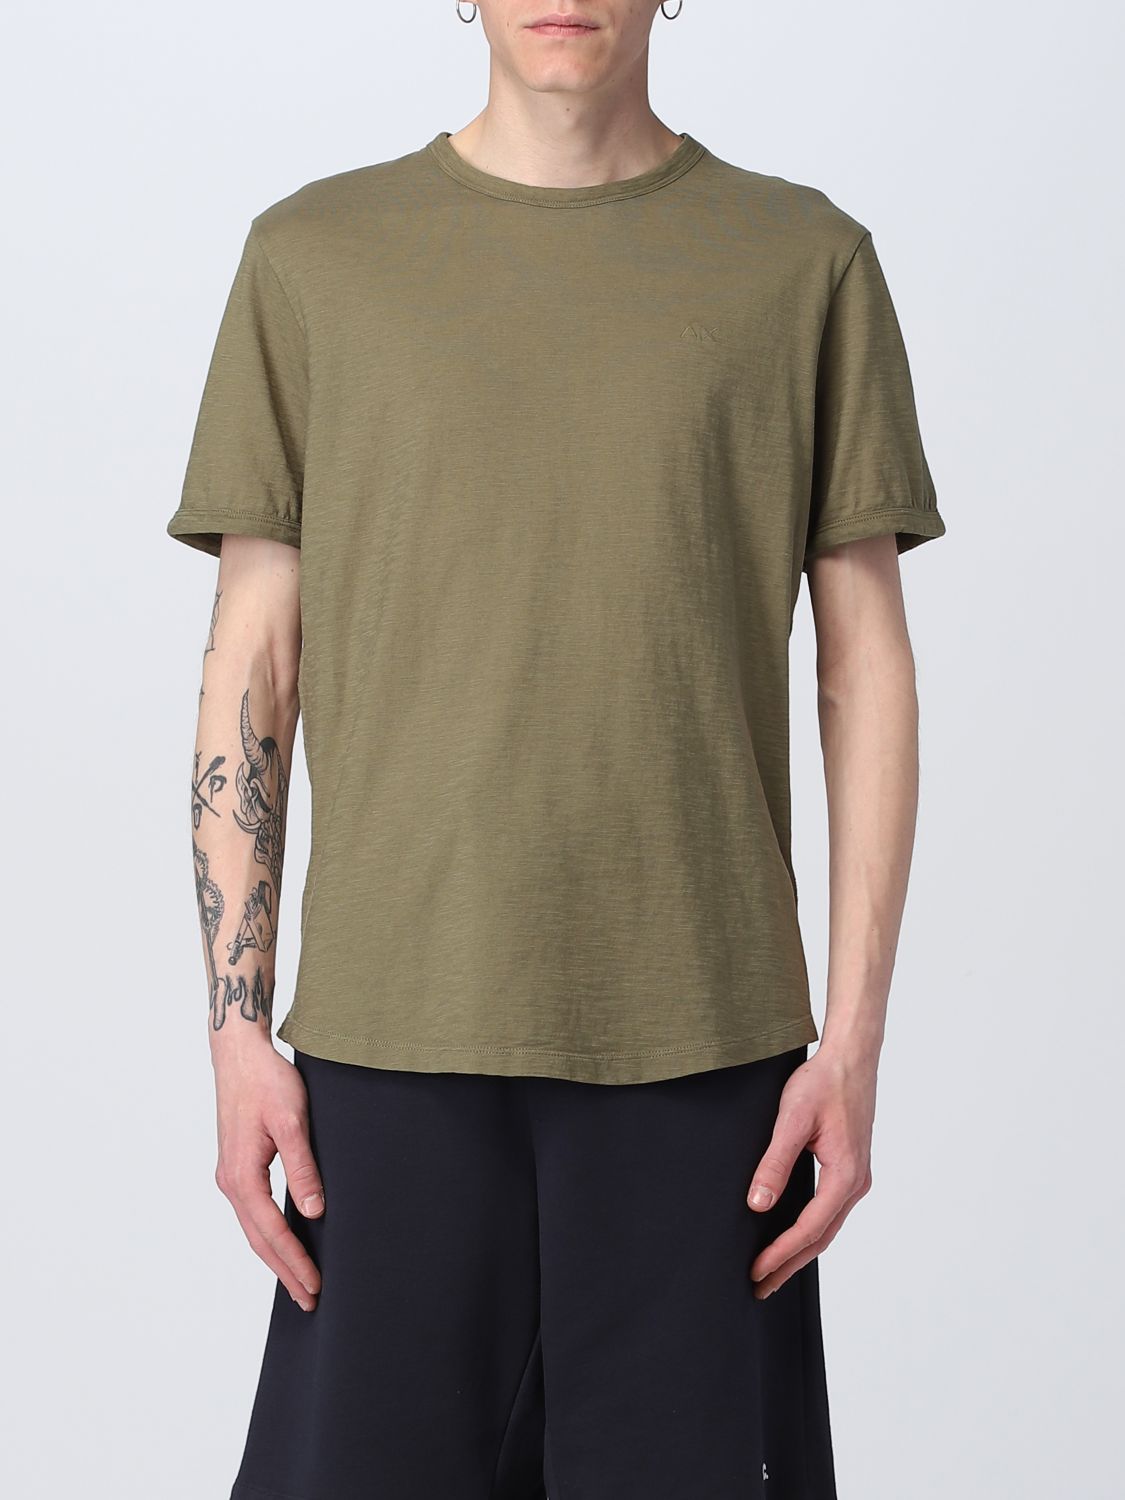 SUN 68: t-shirt for man - Military | Sun 68 t-shirt T33115 online on ...